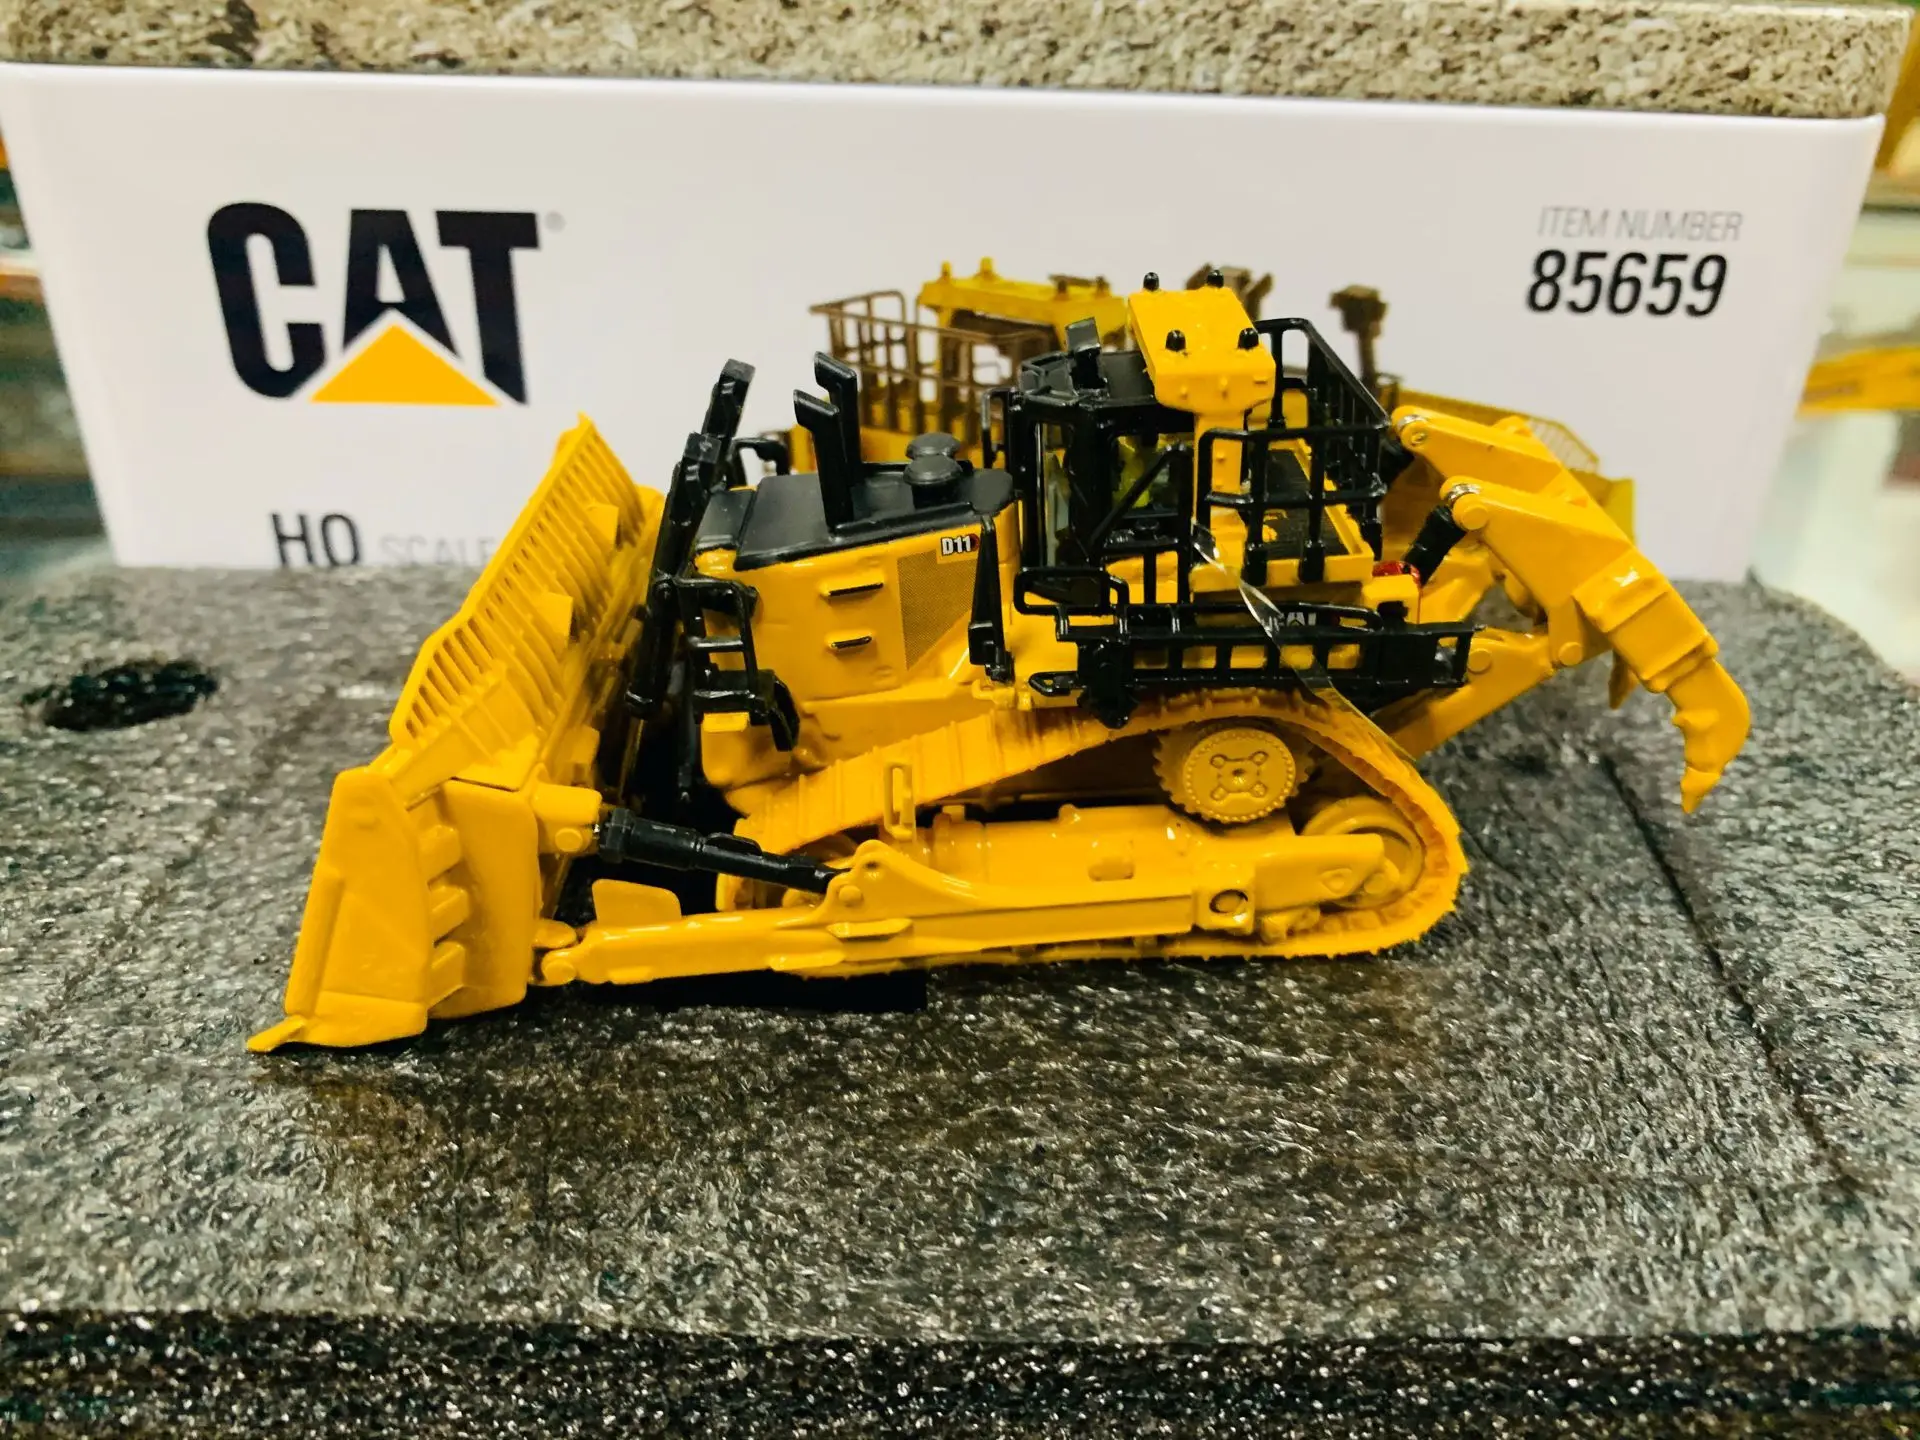 

Caterpillar Cat D11 Dozer Tkn Design 1/87 HO Scale Metal Model By DieCast Masters DM85659 New in Box